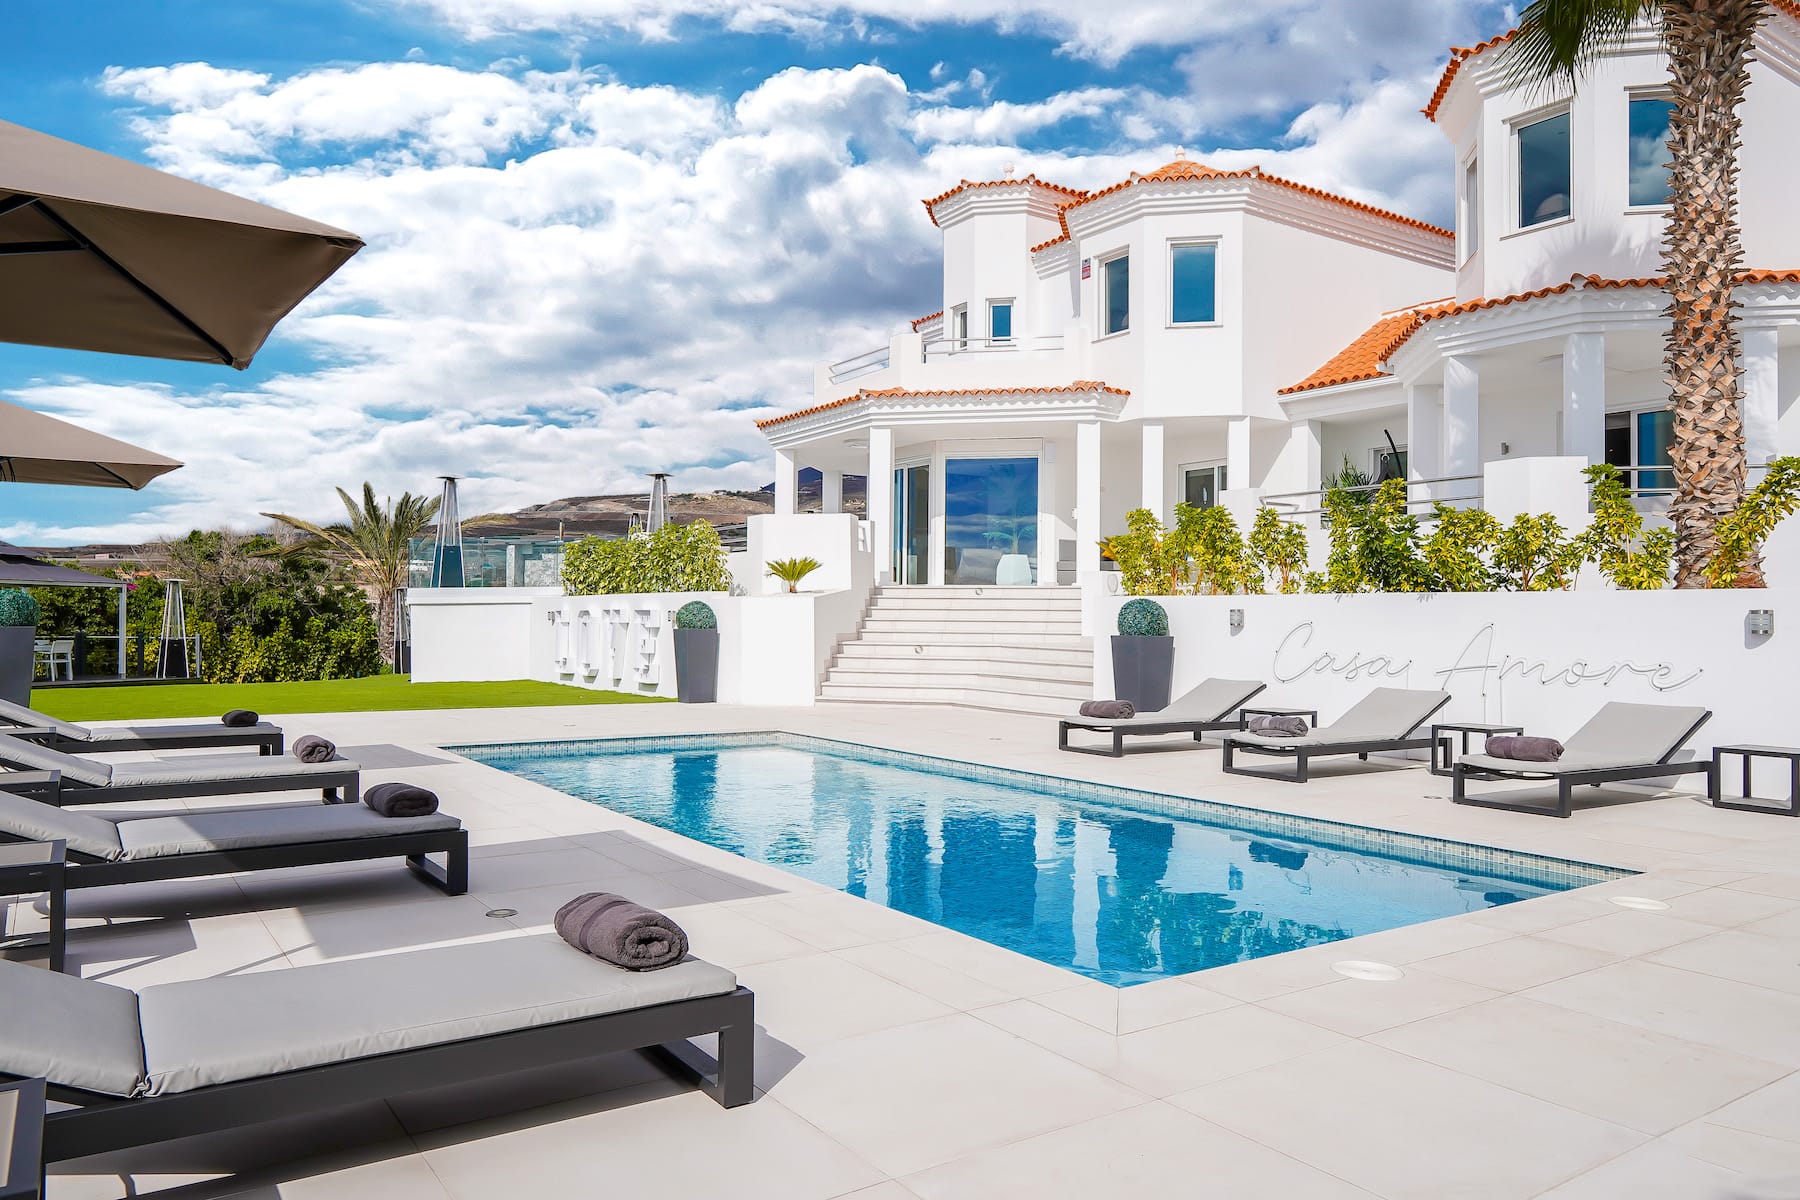 luxury holiday villas rental in Tenerife at Adeje